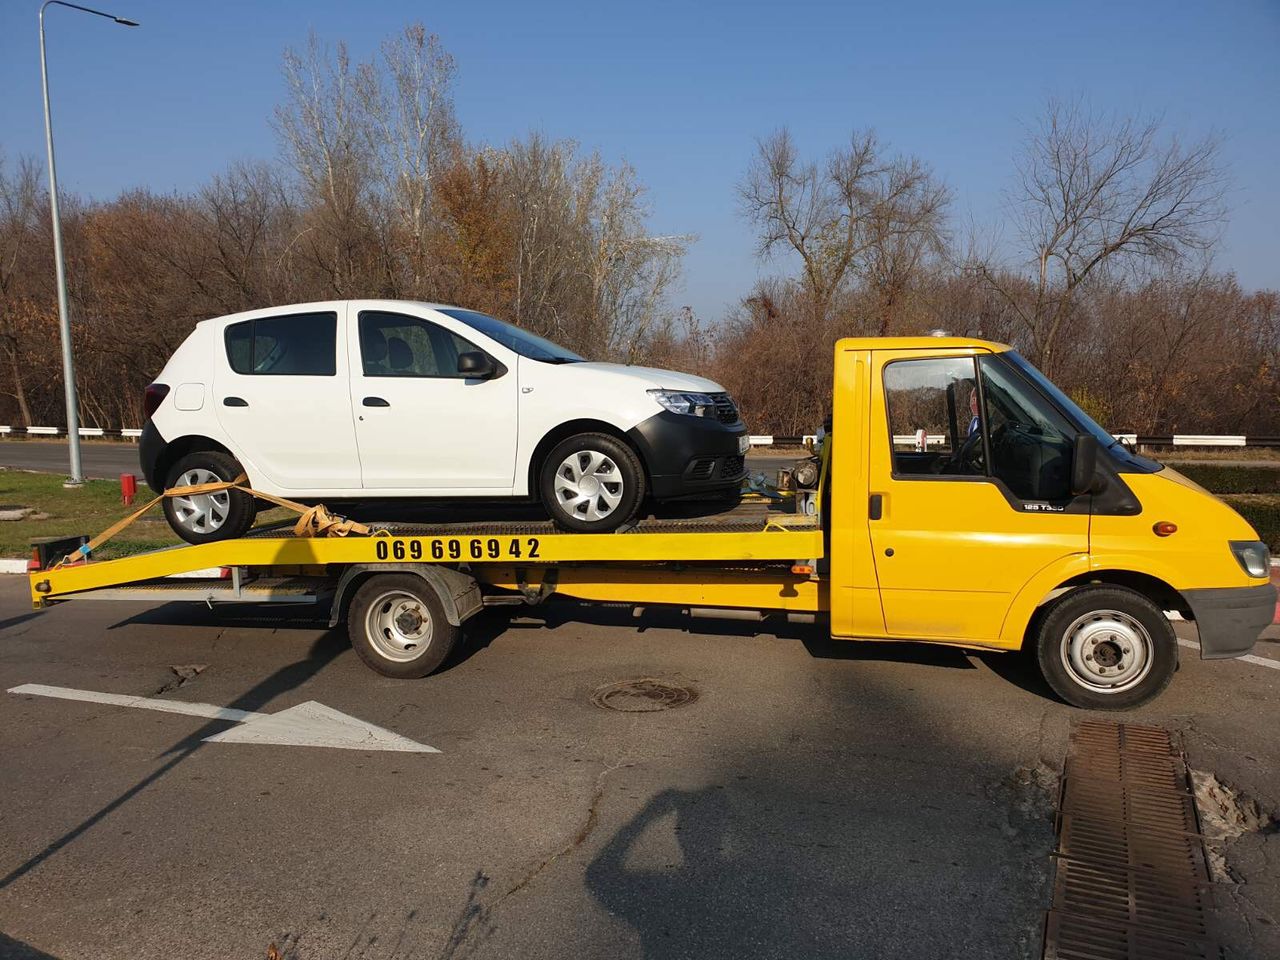 Tractari auto Chisinau Moldova- эвакутор фото 3